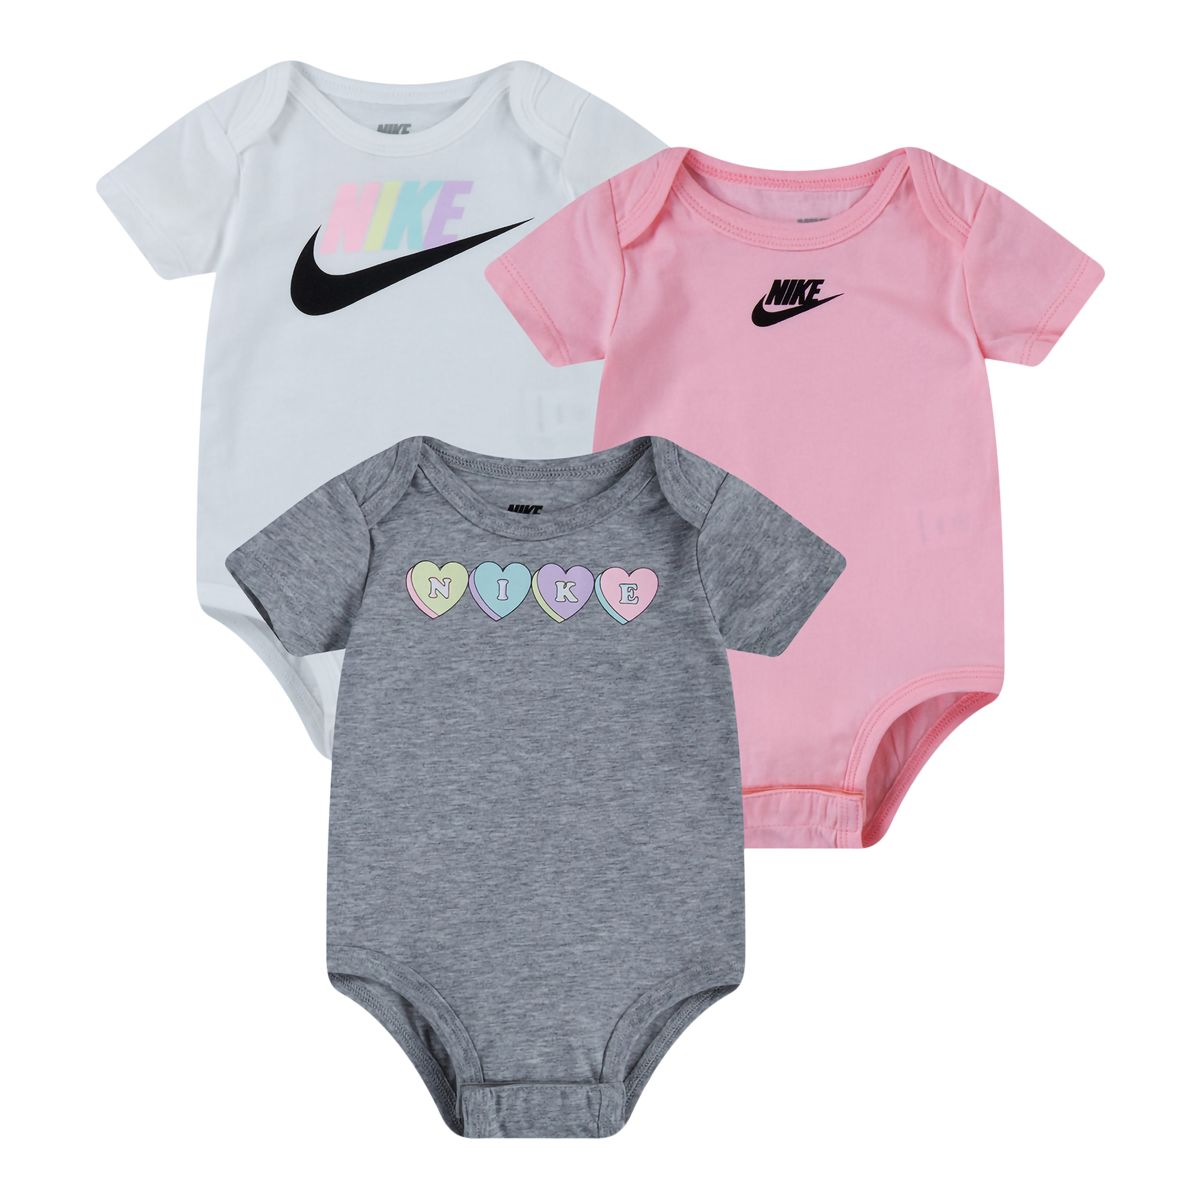 Nike Infant Girls' 0/3M-9M Bodysuit - 3 Pack | SportChek